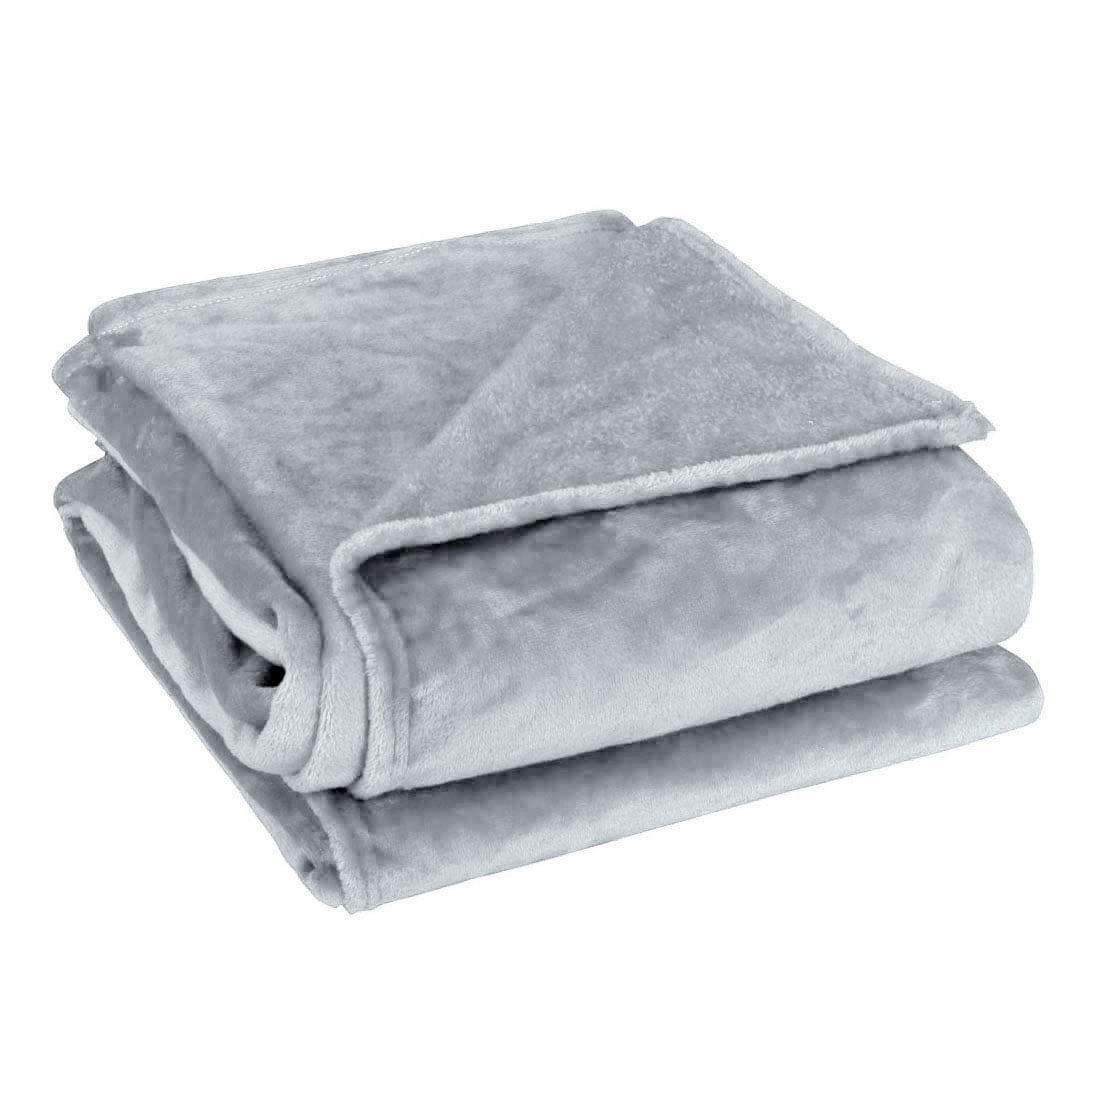 Soft Warm Fleece Blanket Throw Rug Plain Plush Flannel Blankets Light Gray Twin Walmart Canada